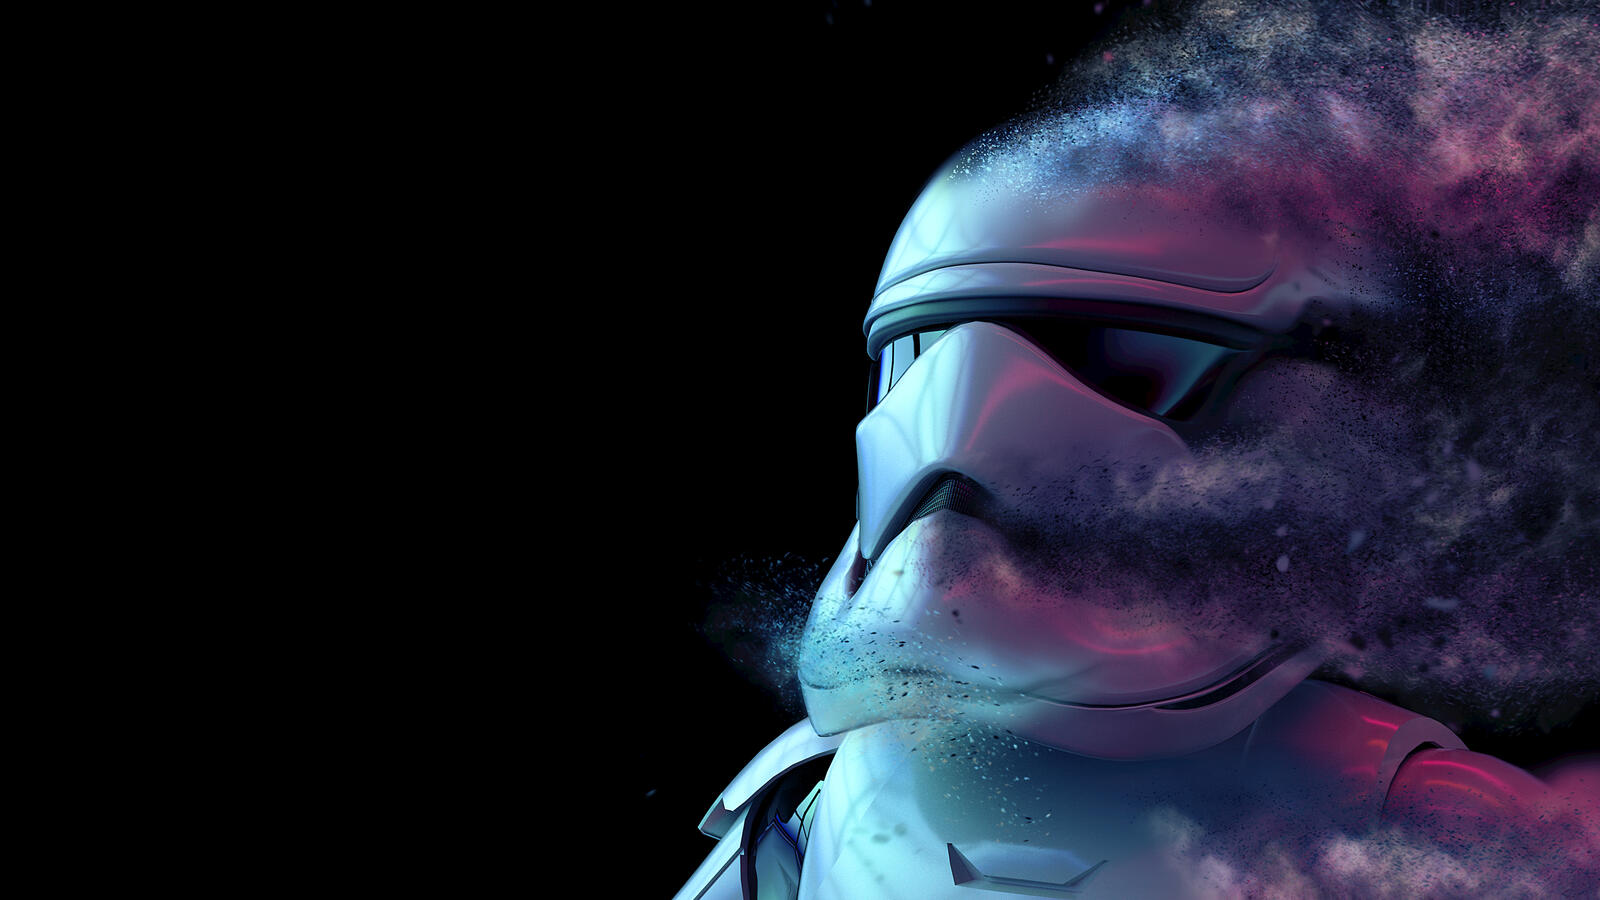 Wallpapers stormtrooper star wars rendering on the desktop